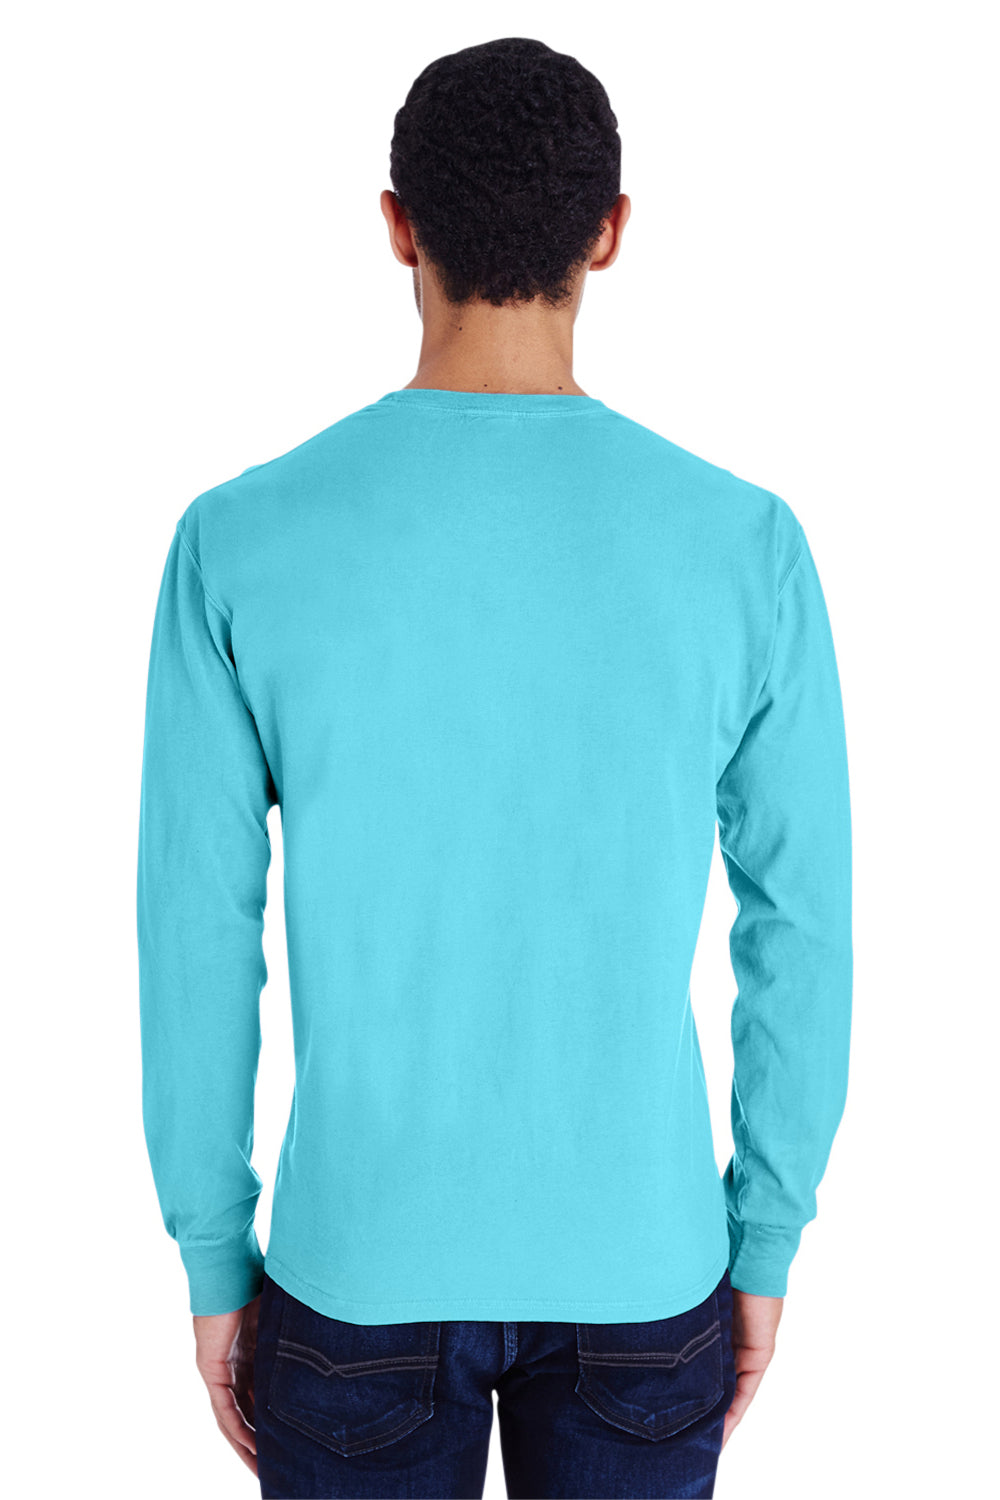 ComfortWash by Hanes GDH250 Long Sleeve Crewneck T-Shirt w/ Pocket Freshwater Blue Back